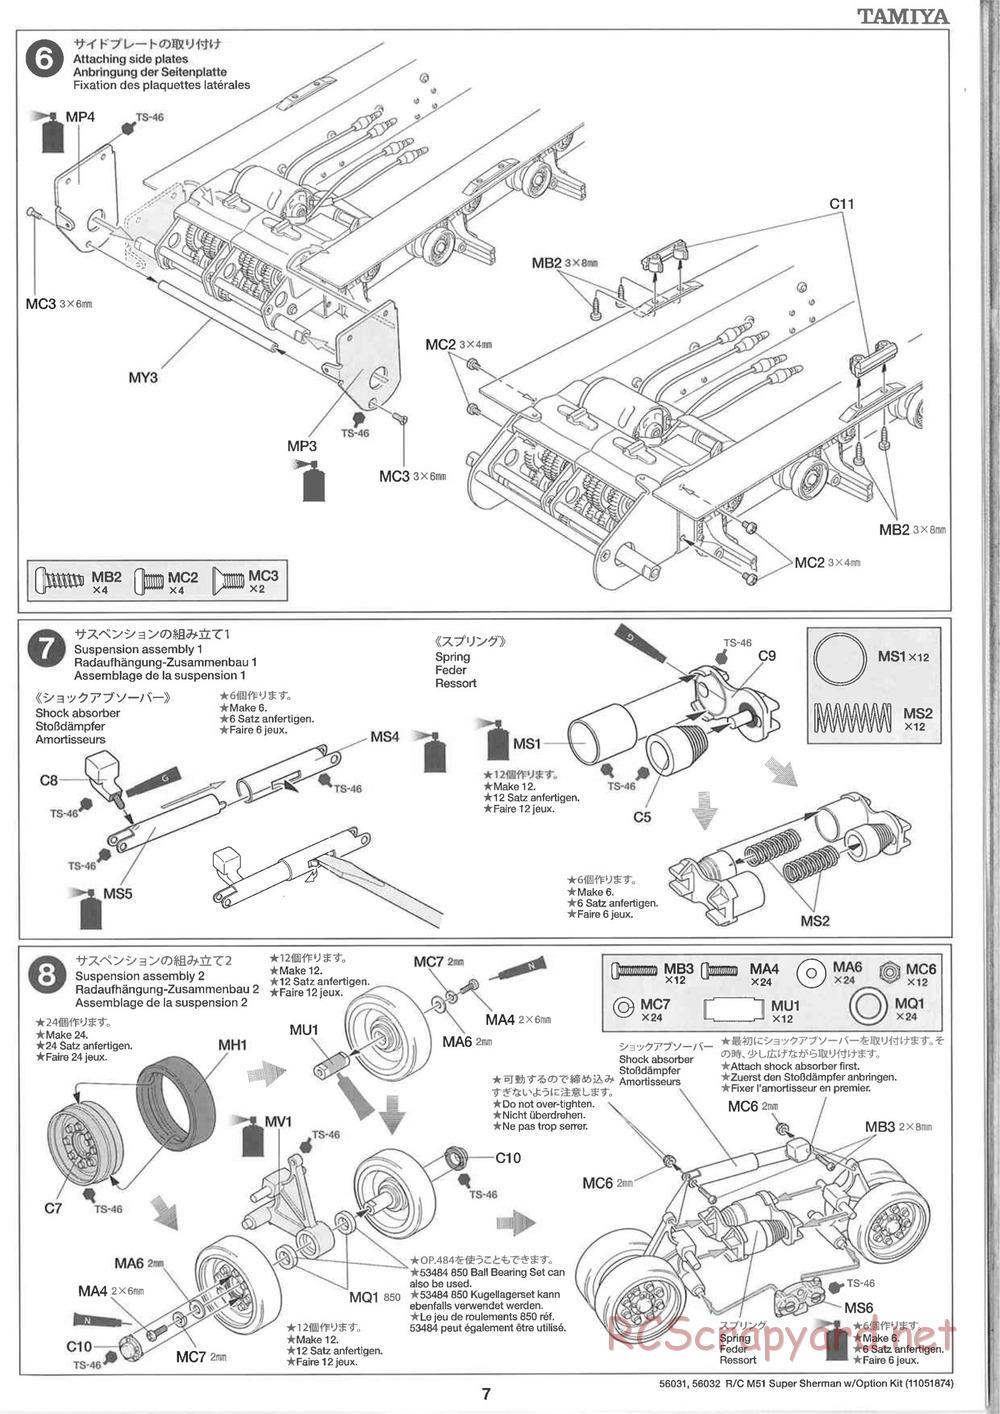 Tamiya - Super Sherman M-51 - 1/16 Scale Chassis - Manual - Page 7